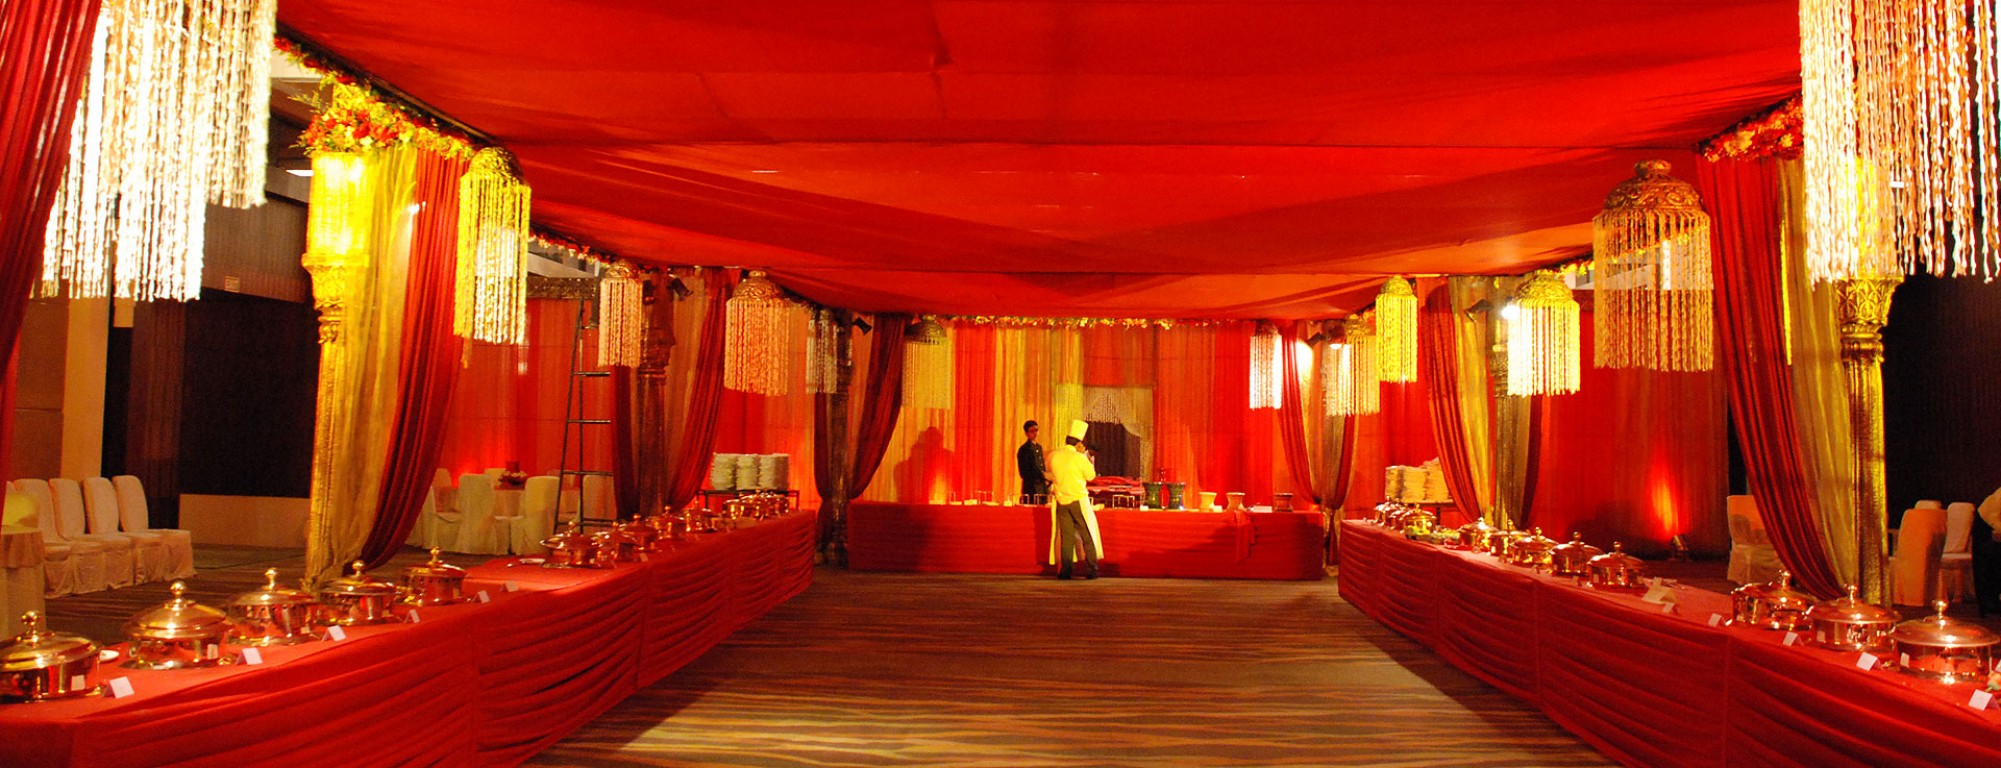 Tent House in Noida